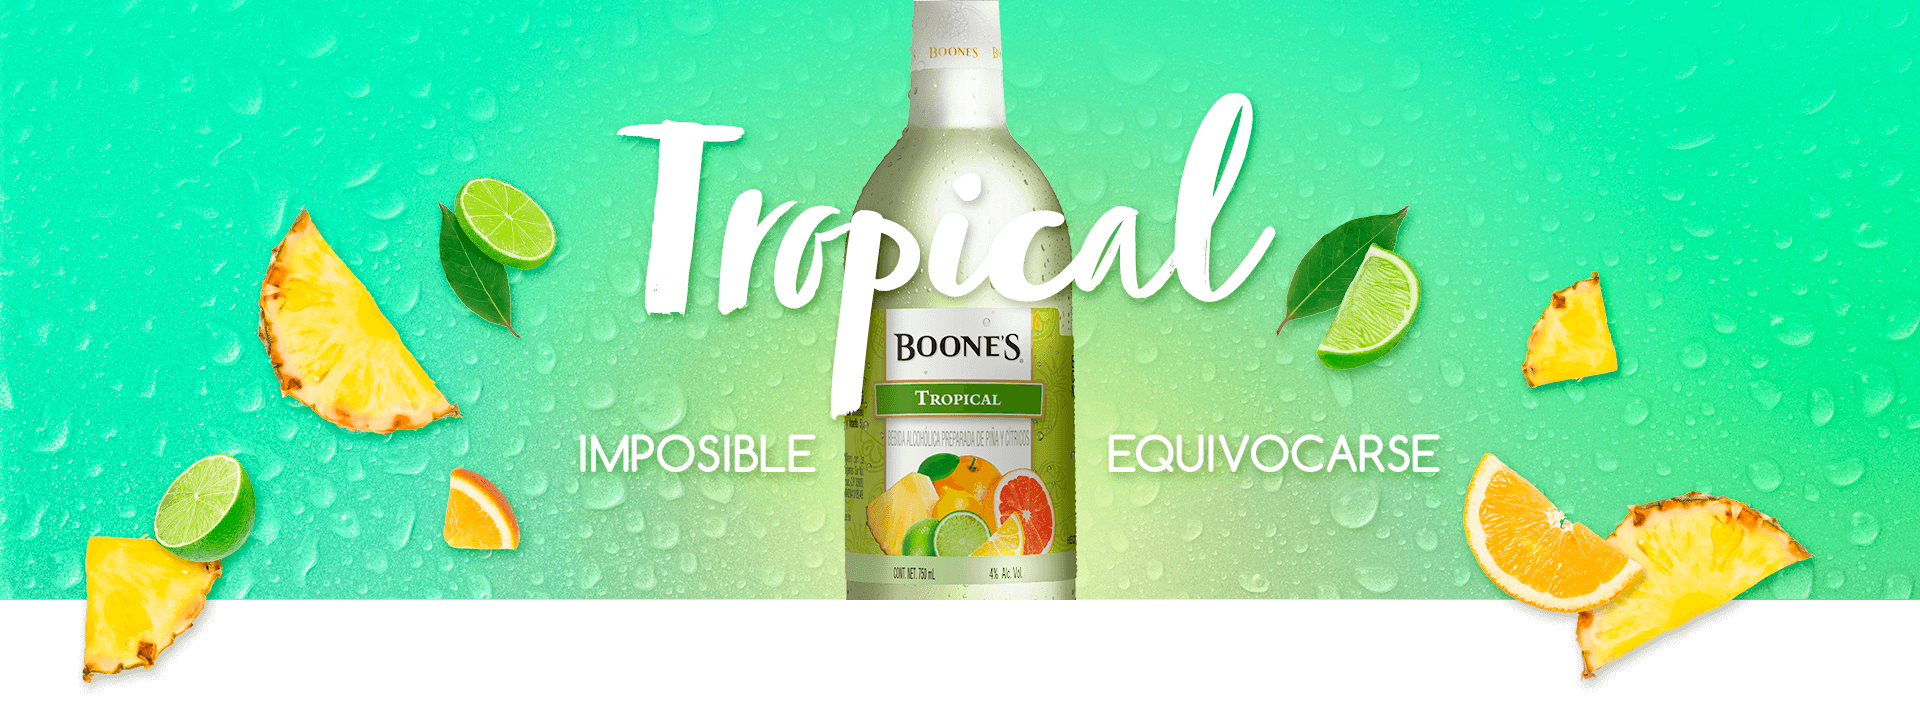 Boones Tropical